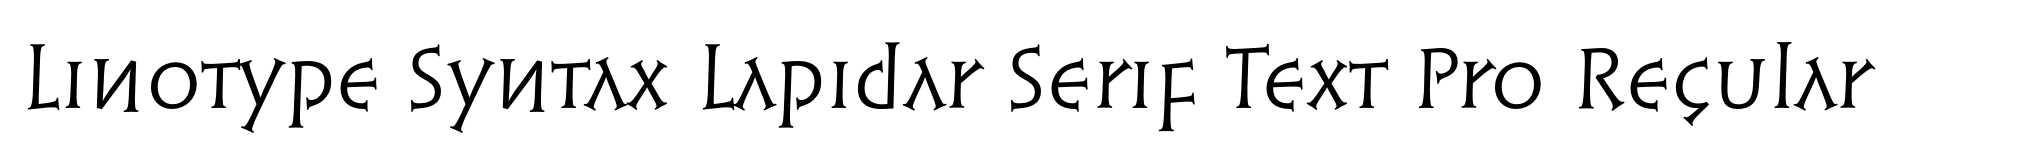 Linotype Syntax Lapidar Serif Text Pro Regular image